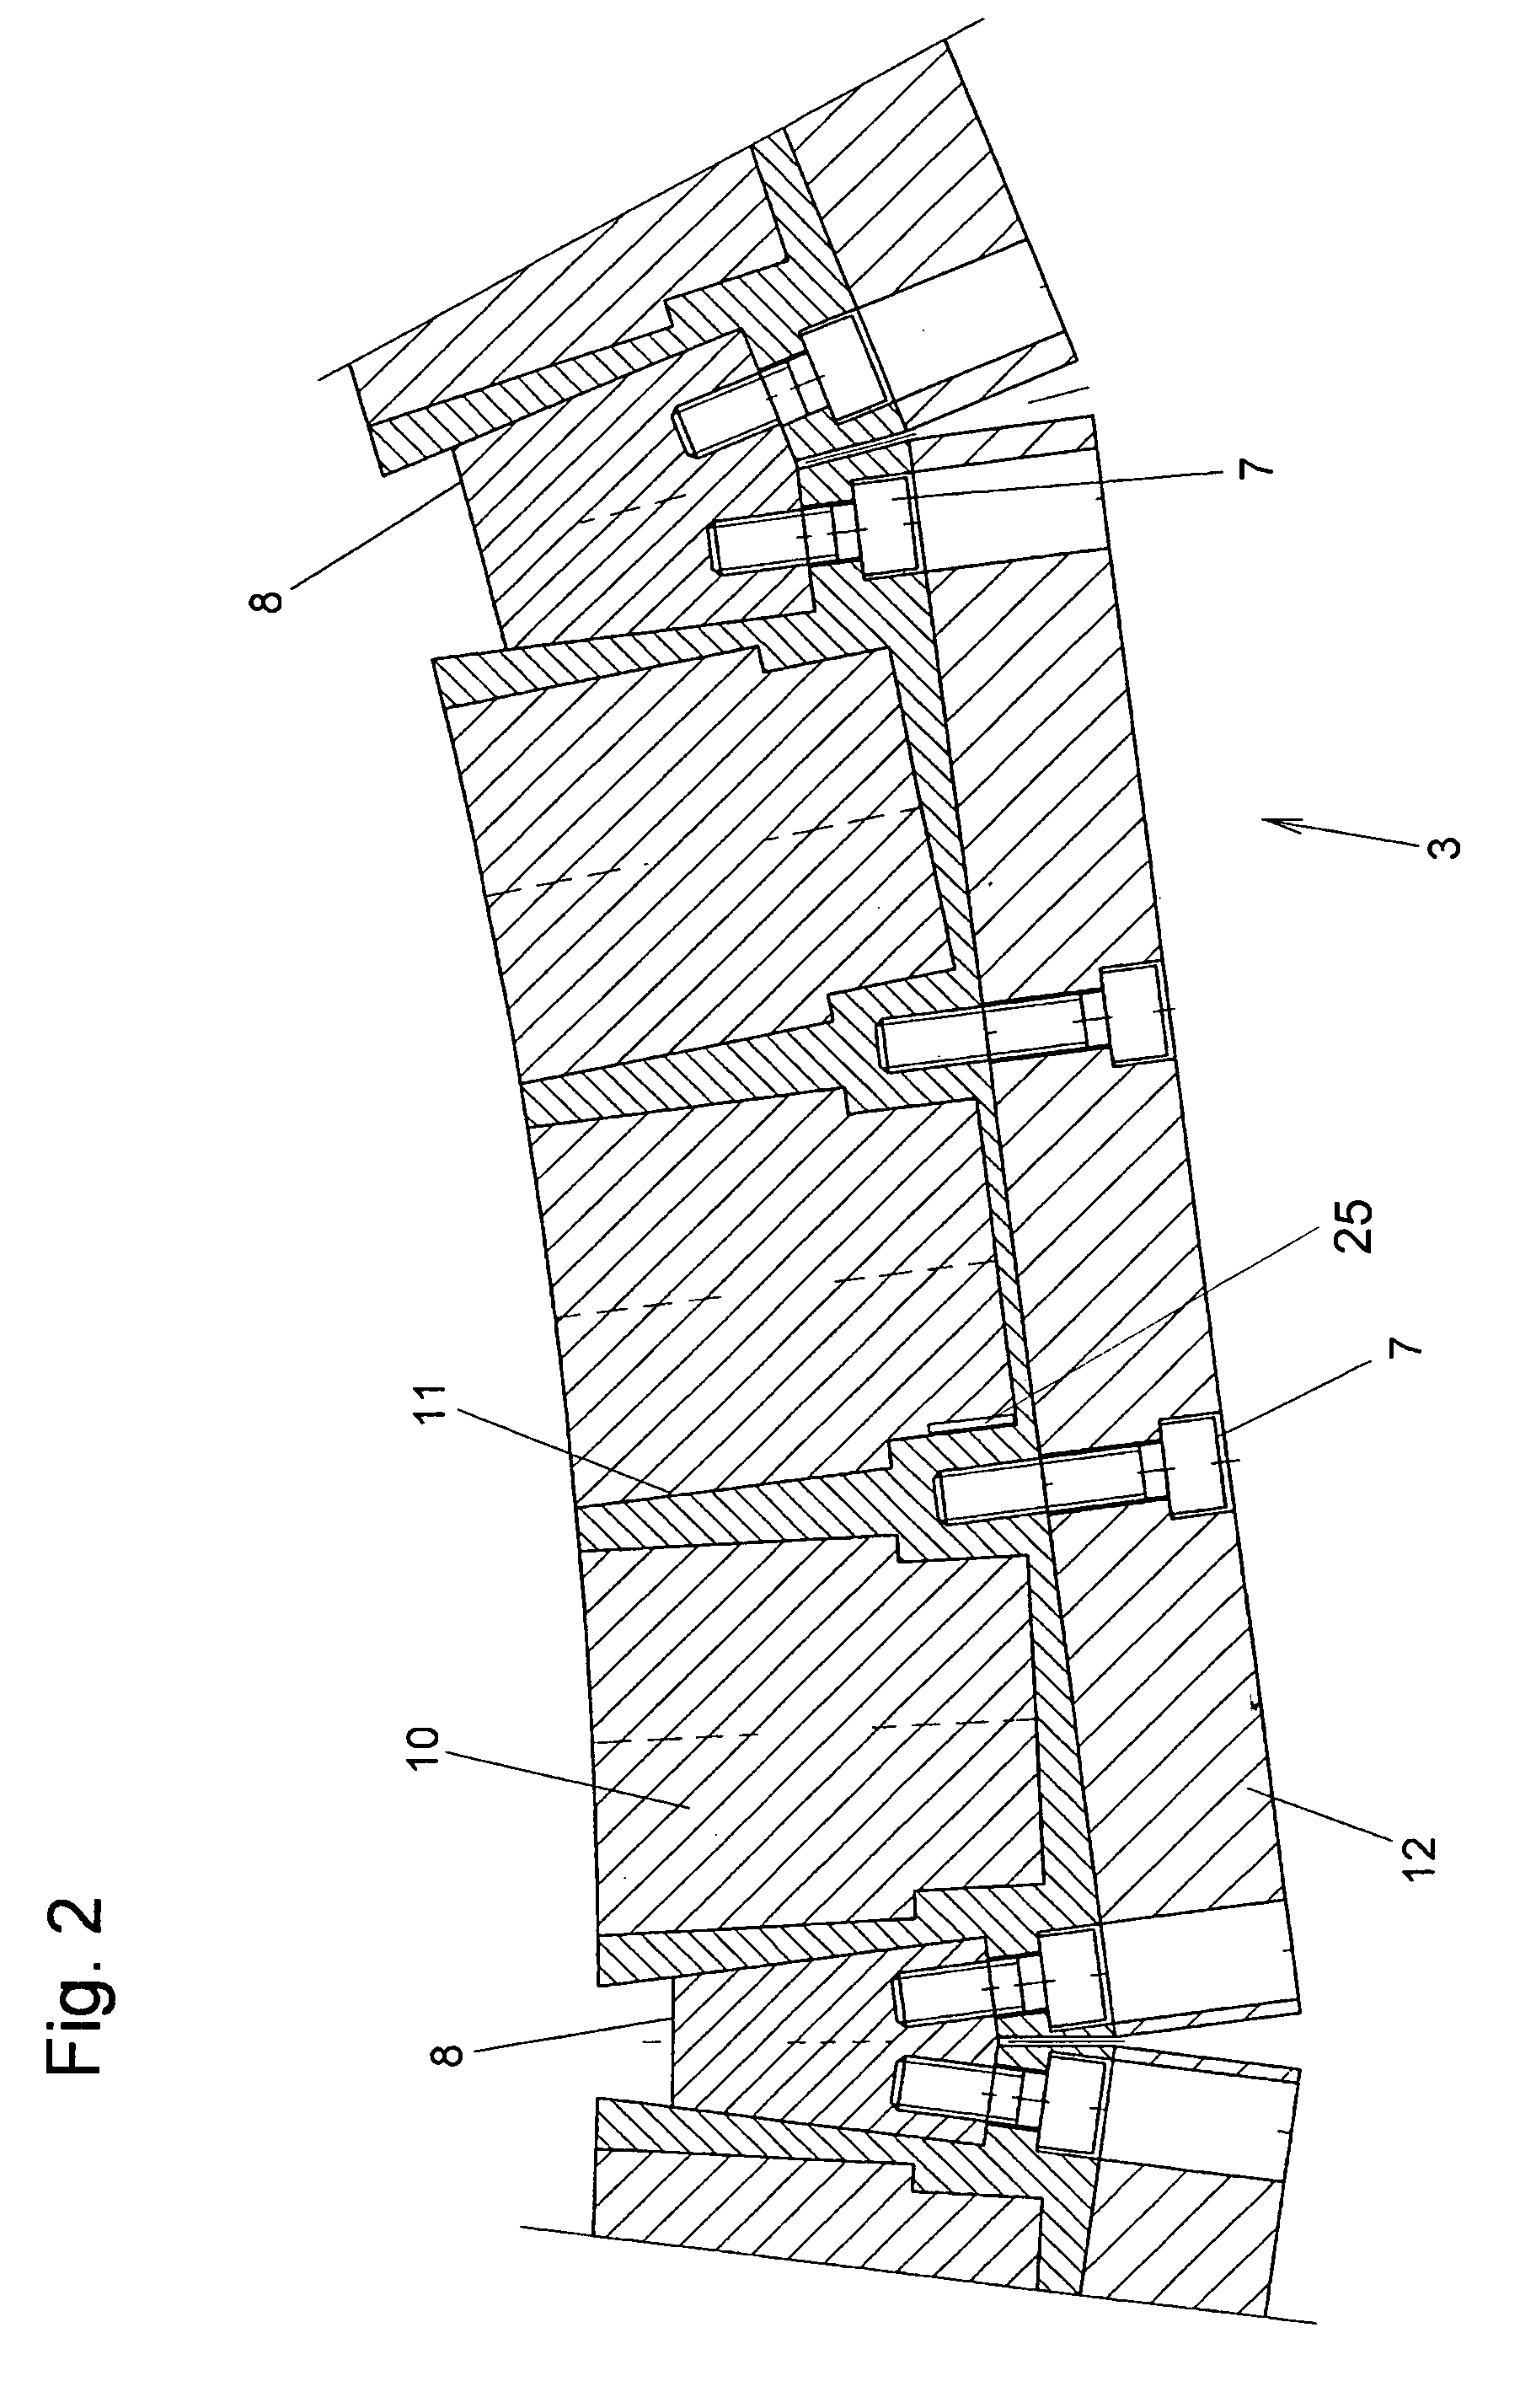 Torque motor having a segment design